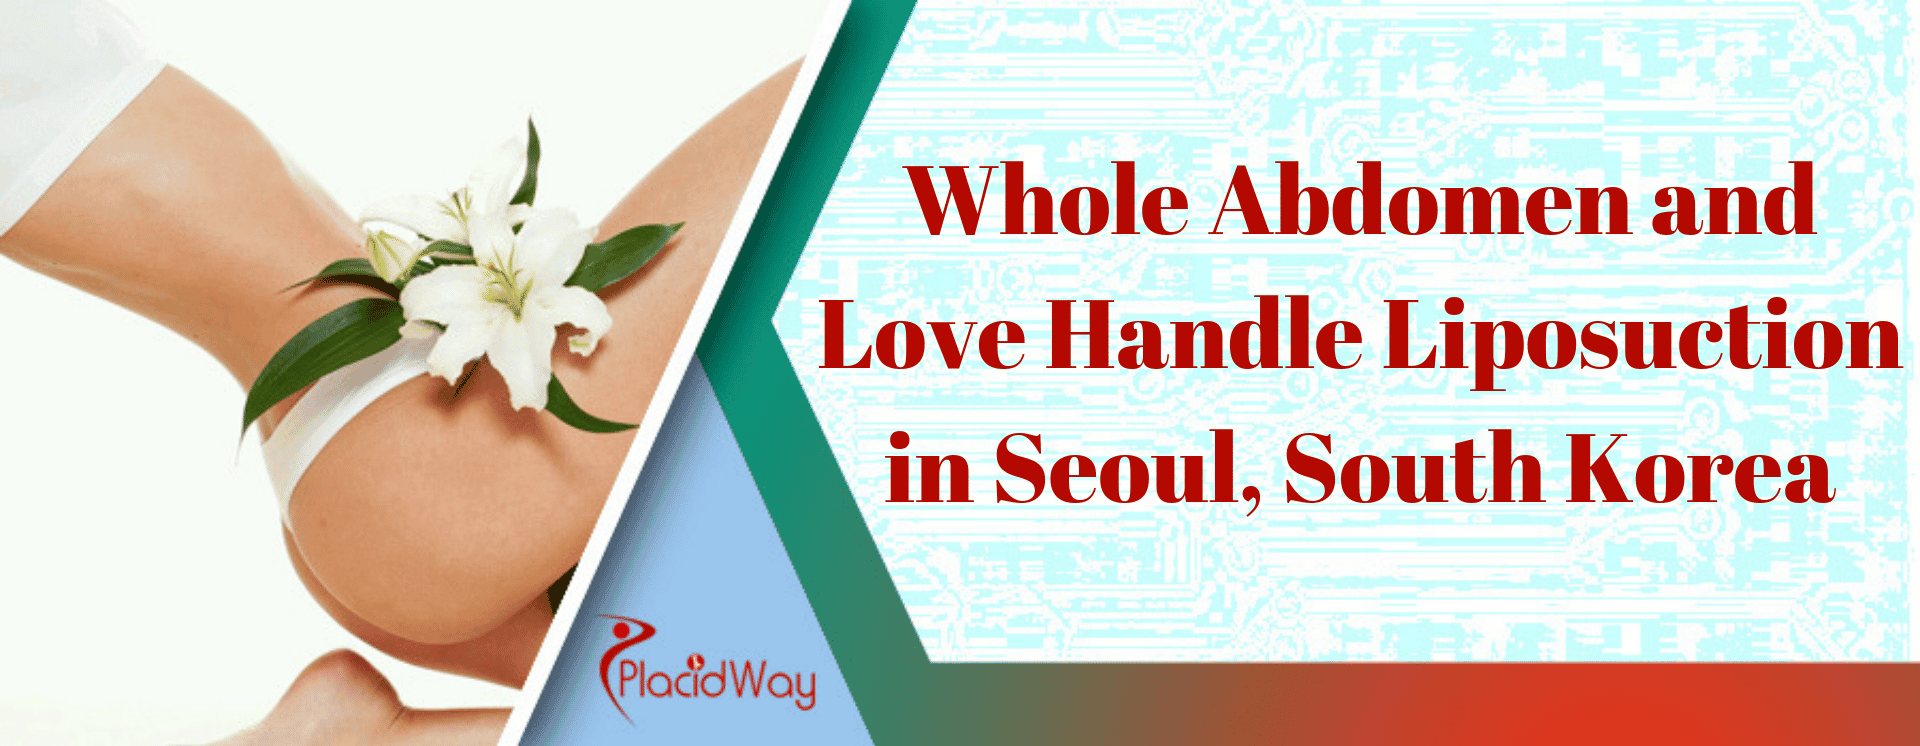 Whole Abdomen and Love Handle Liposuction in Seoul, South Korea